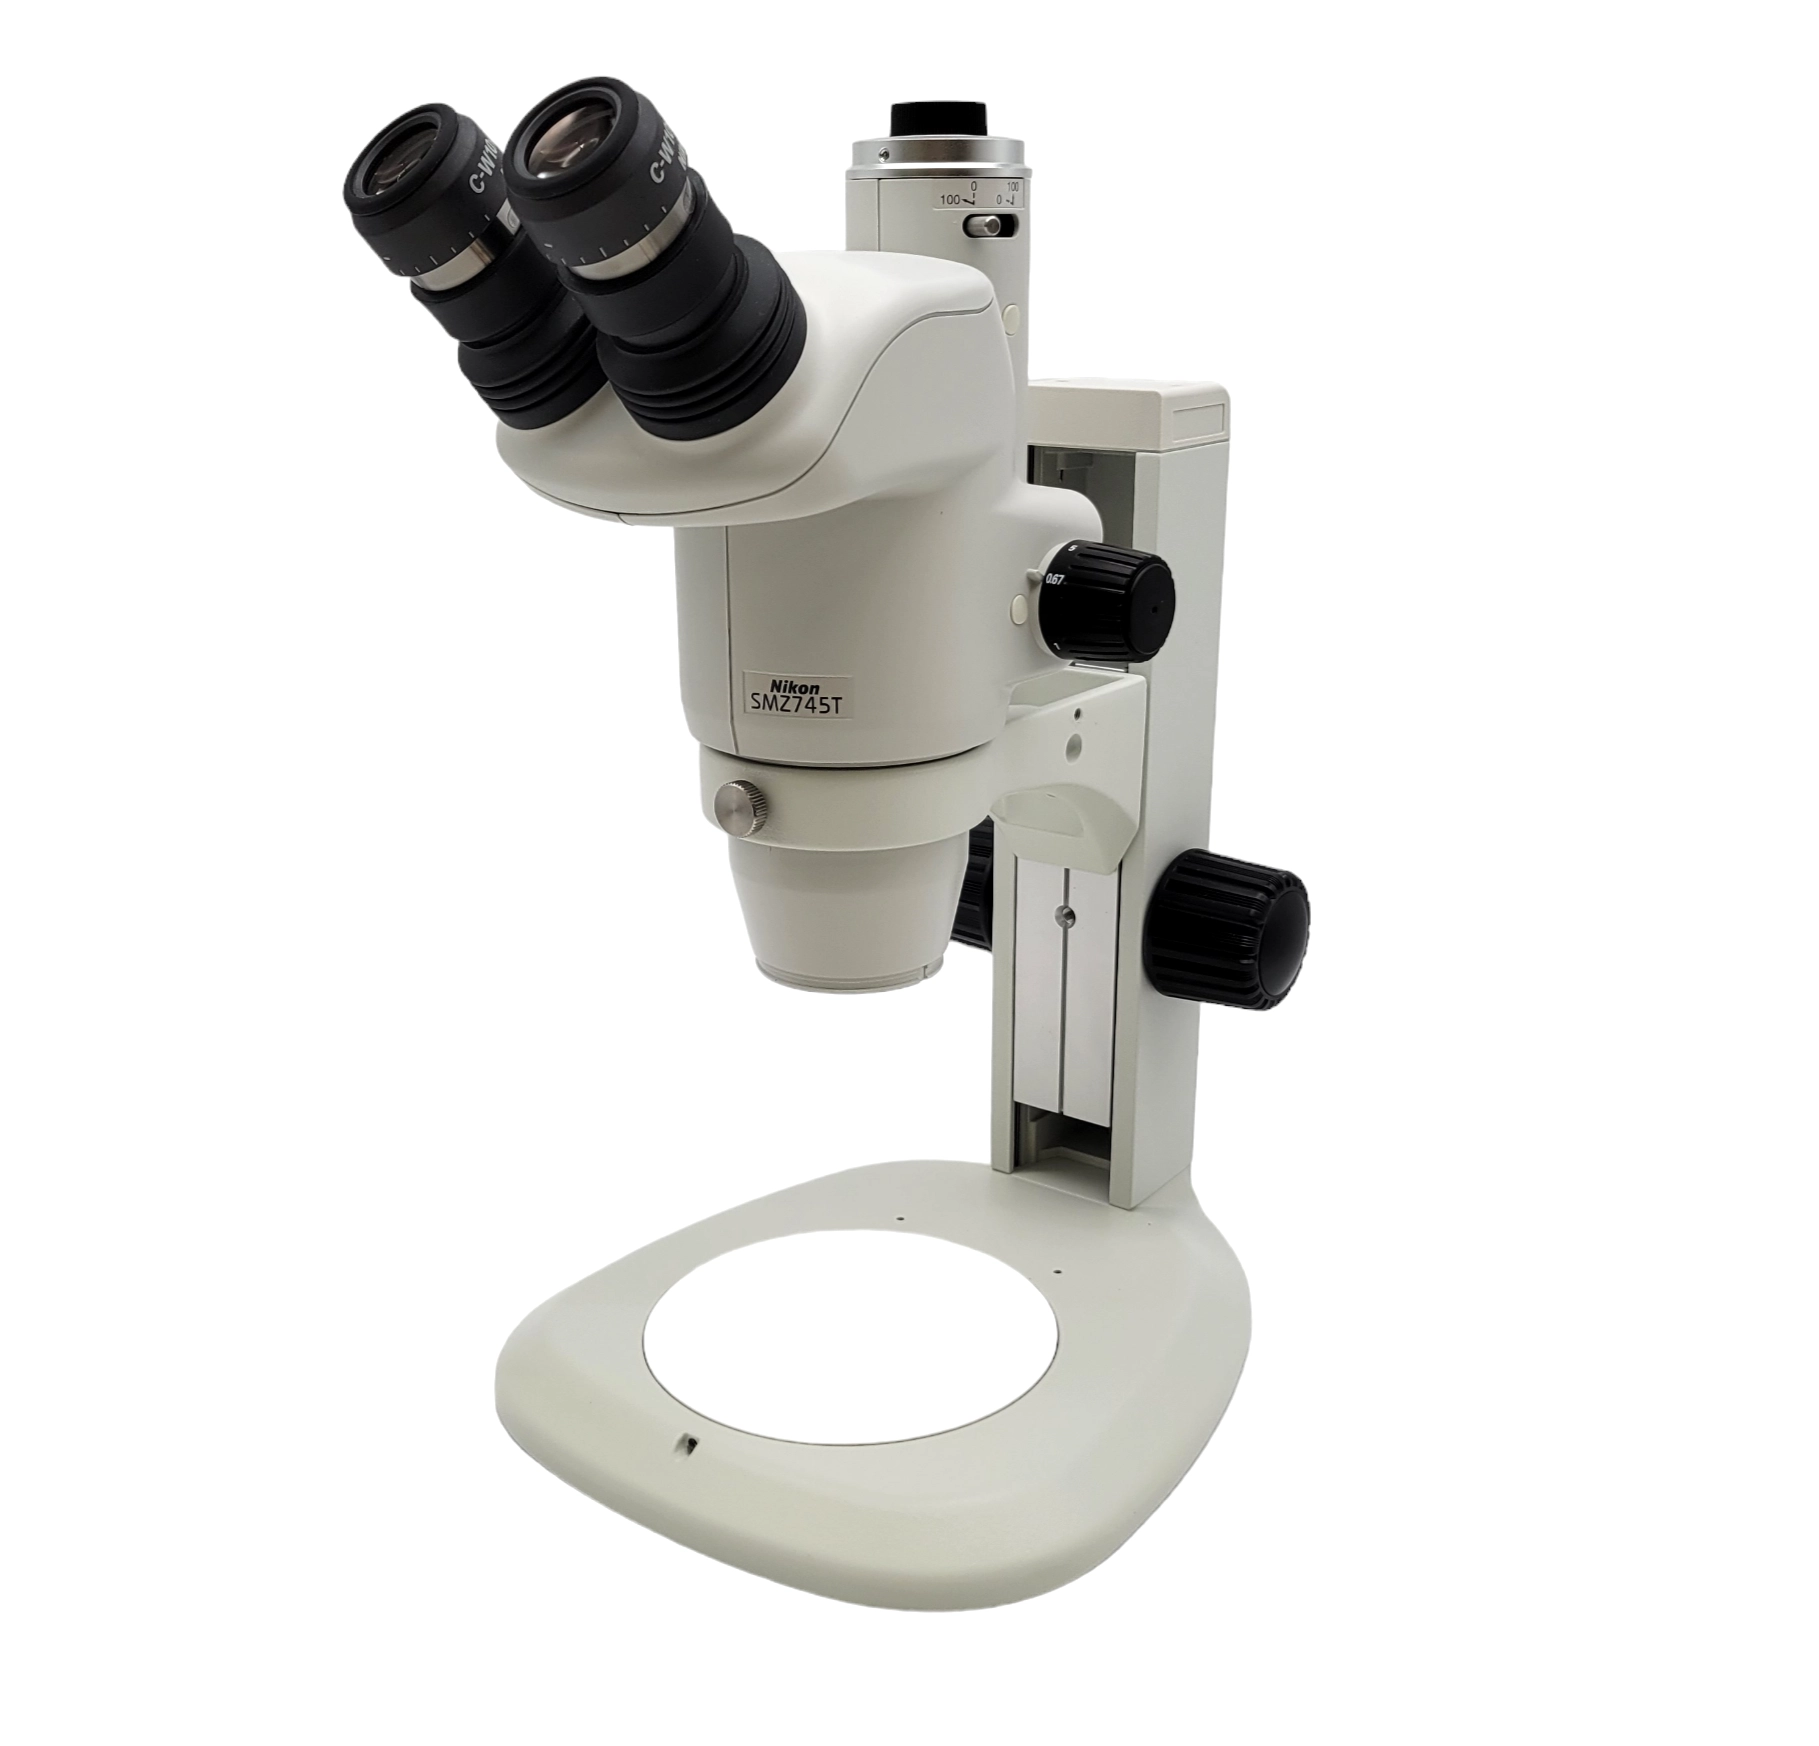 SMZ745T Nikon Stereo Microscope Trinocular system